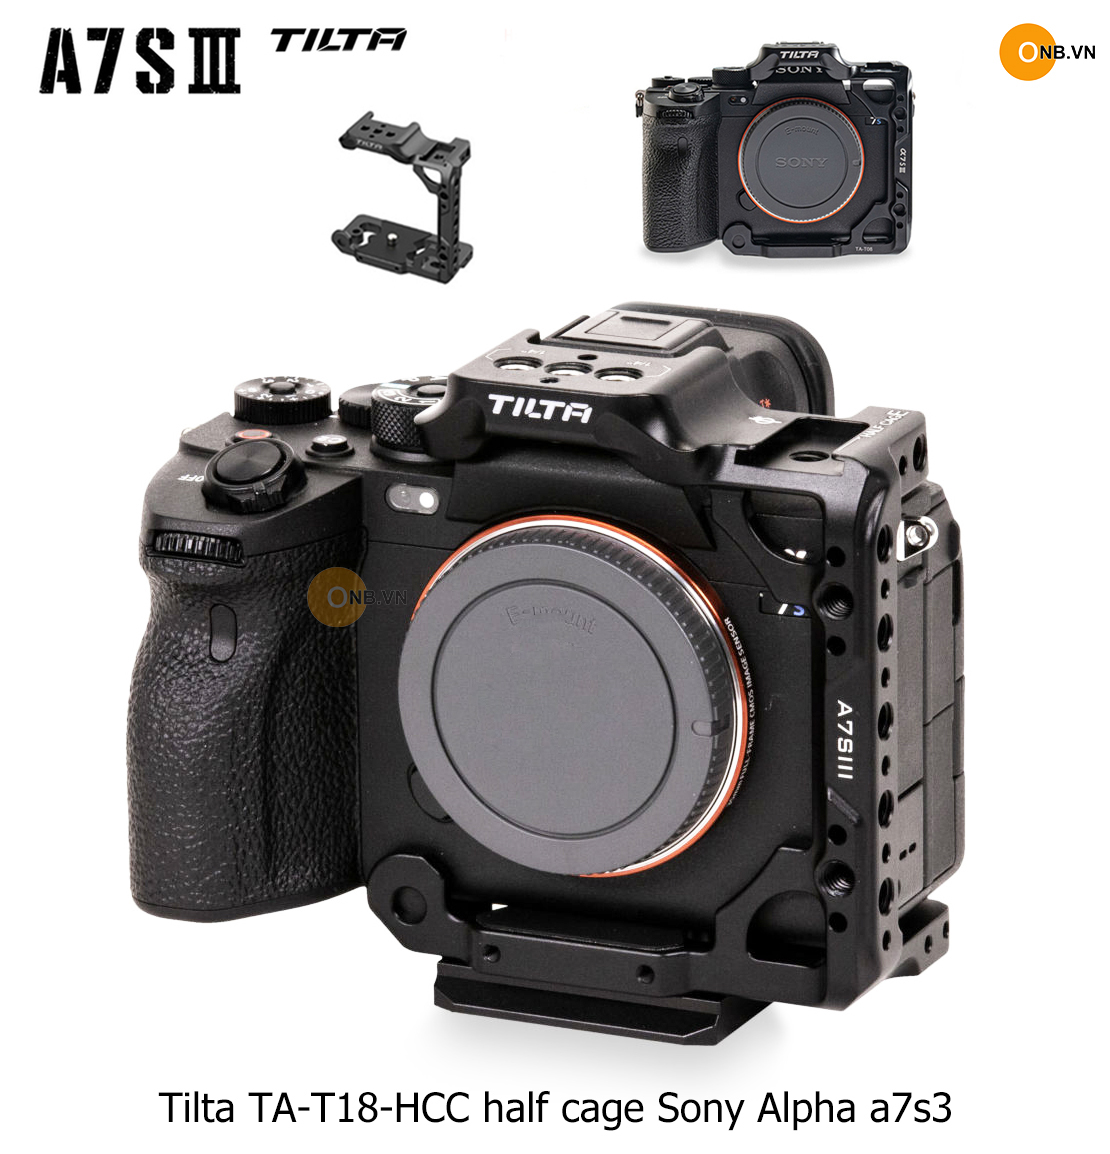 Tilta TA-T18-HCC Half Cage So-ny Alpha a7s3